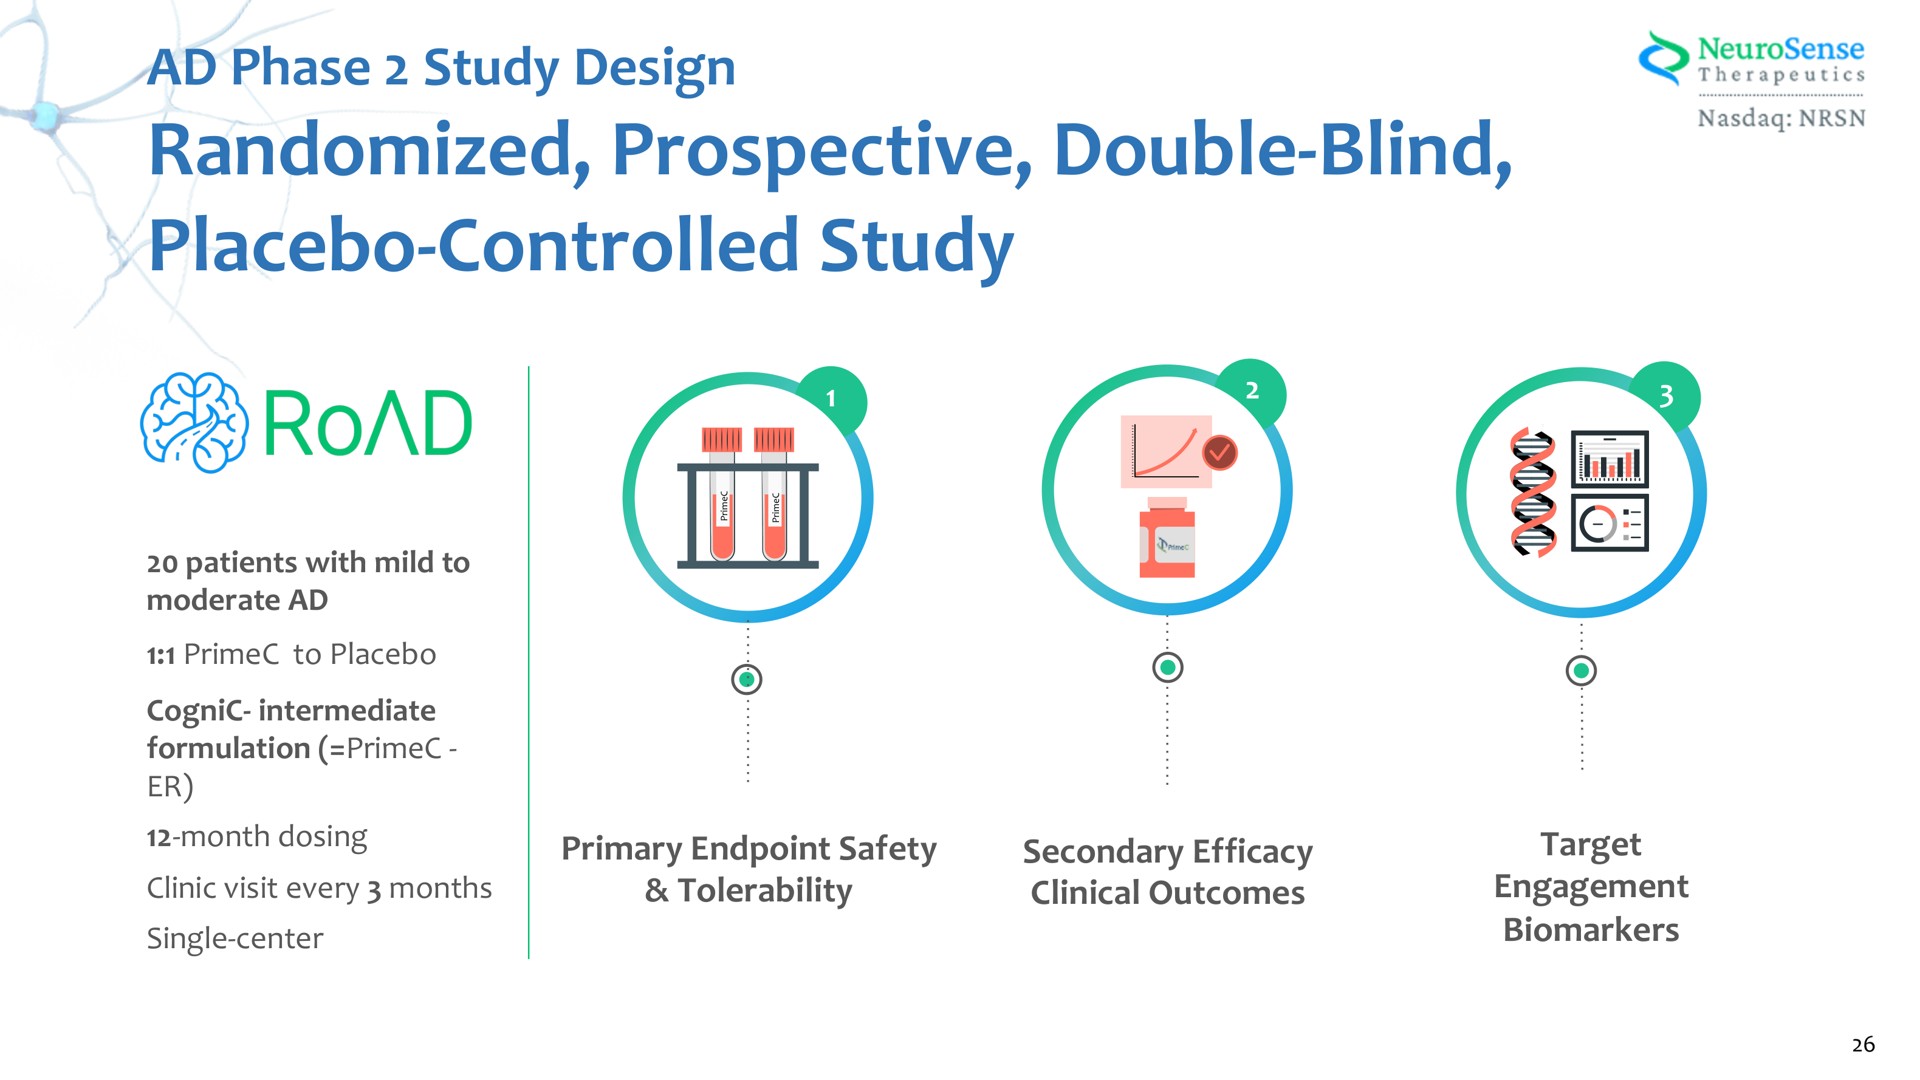 randomized prospective double blind placebo controlled study phase design placebo controlled road | NeuroSense Therapeutics